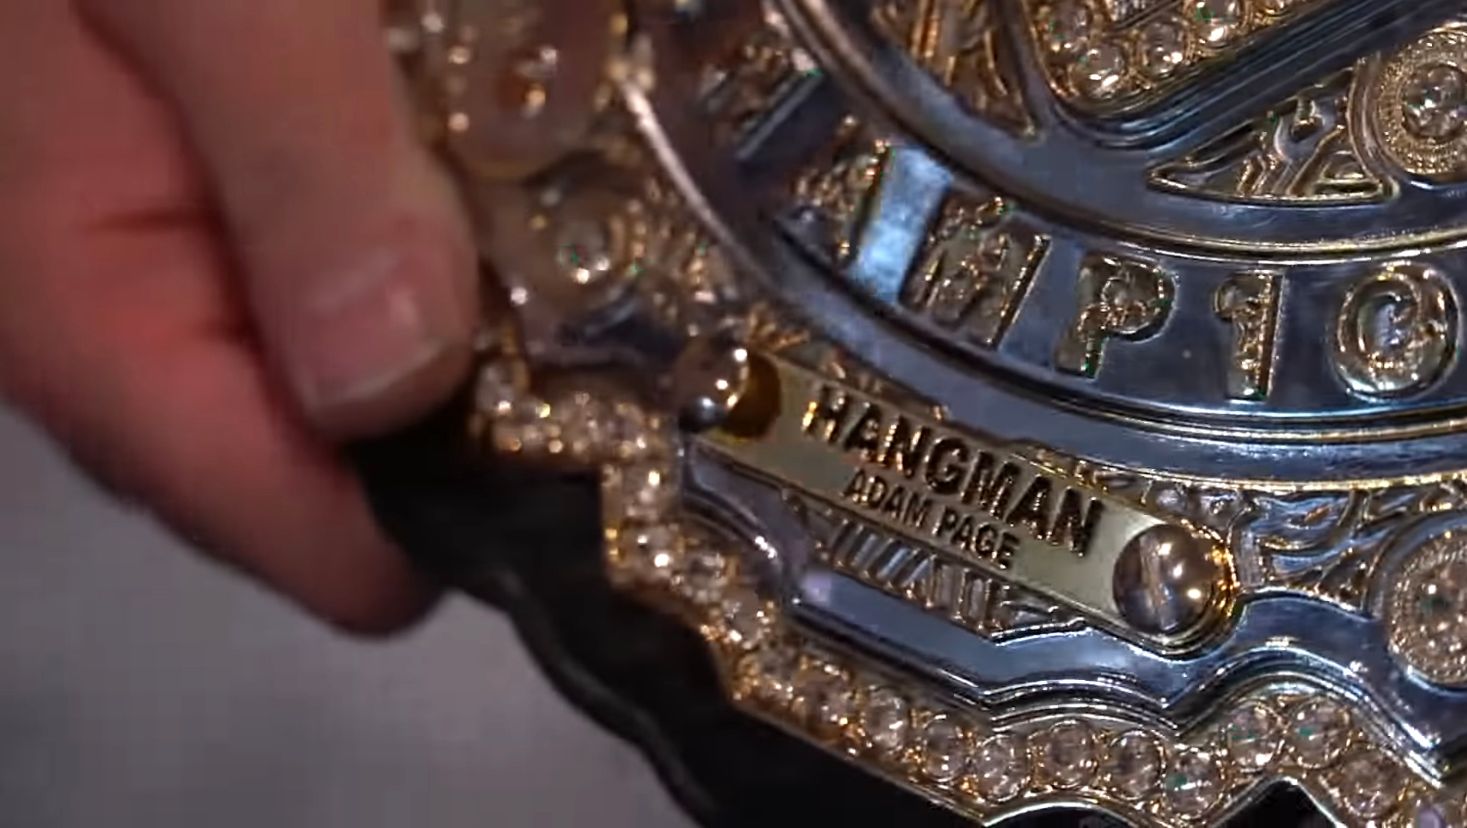 Hangman Page's name plate on the AEW championship